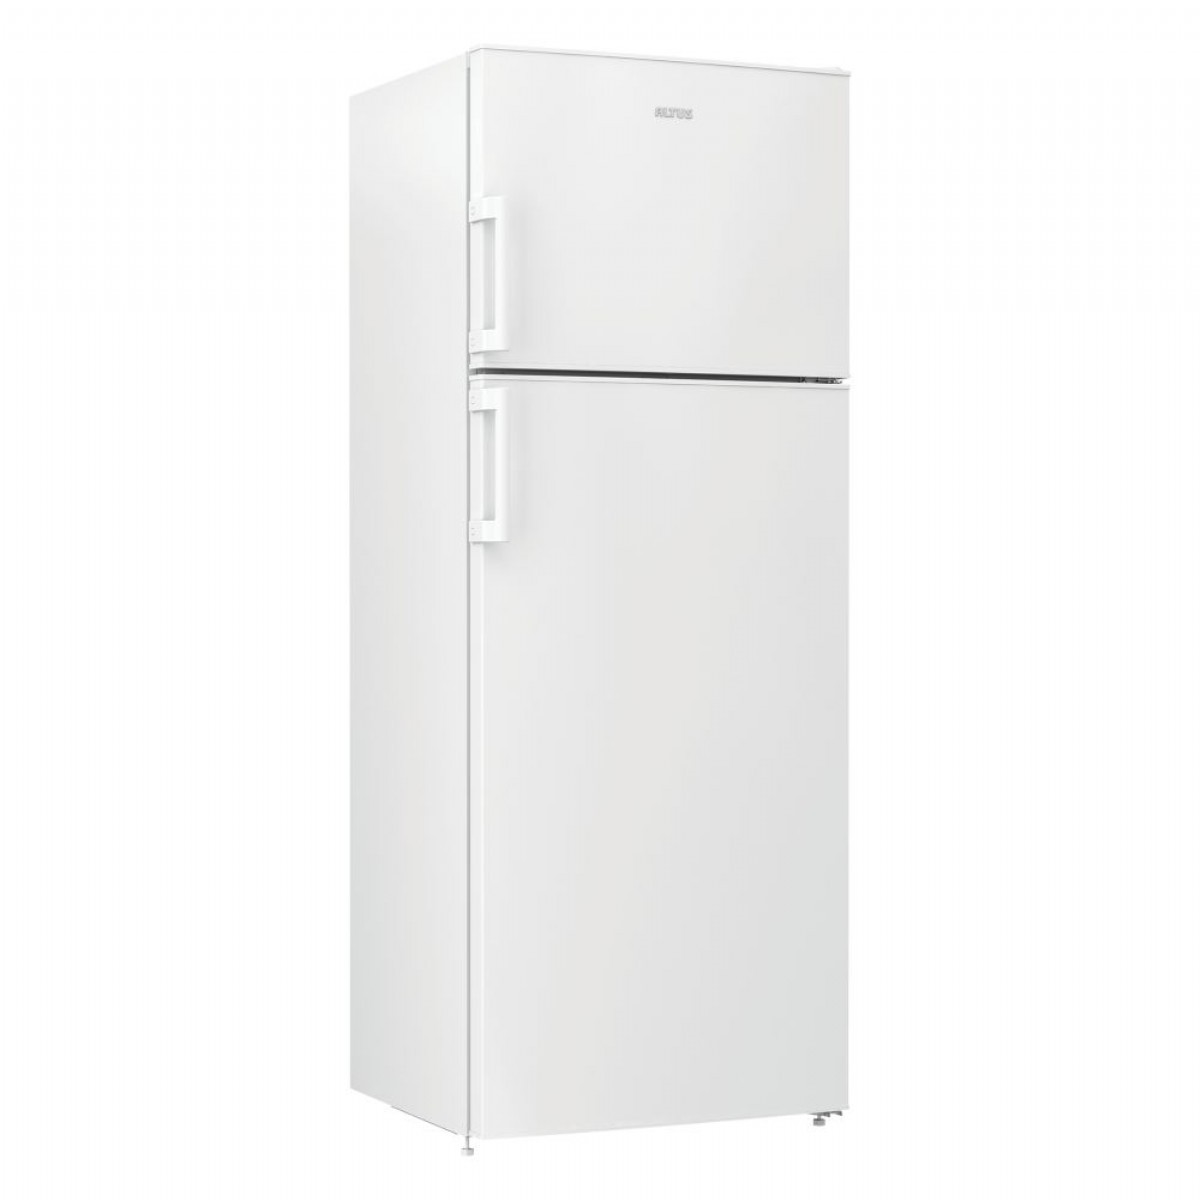 Сток холодильника. Холодильник avex. Avex RFTX 260w3. Холодильник Beko белый. Холодильник Канди двухкамерный.